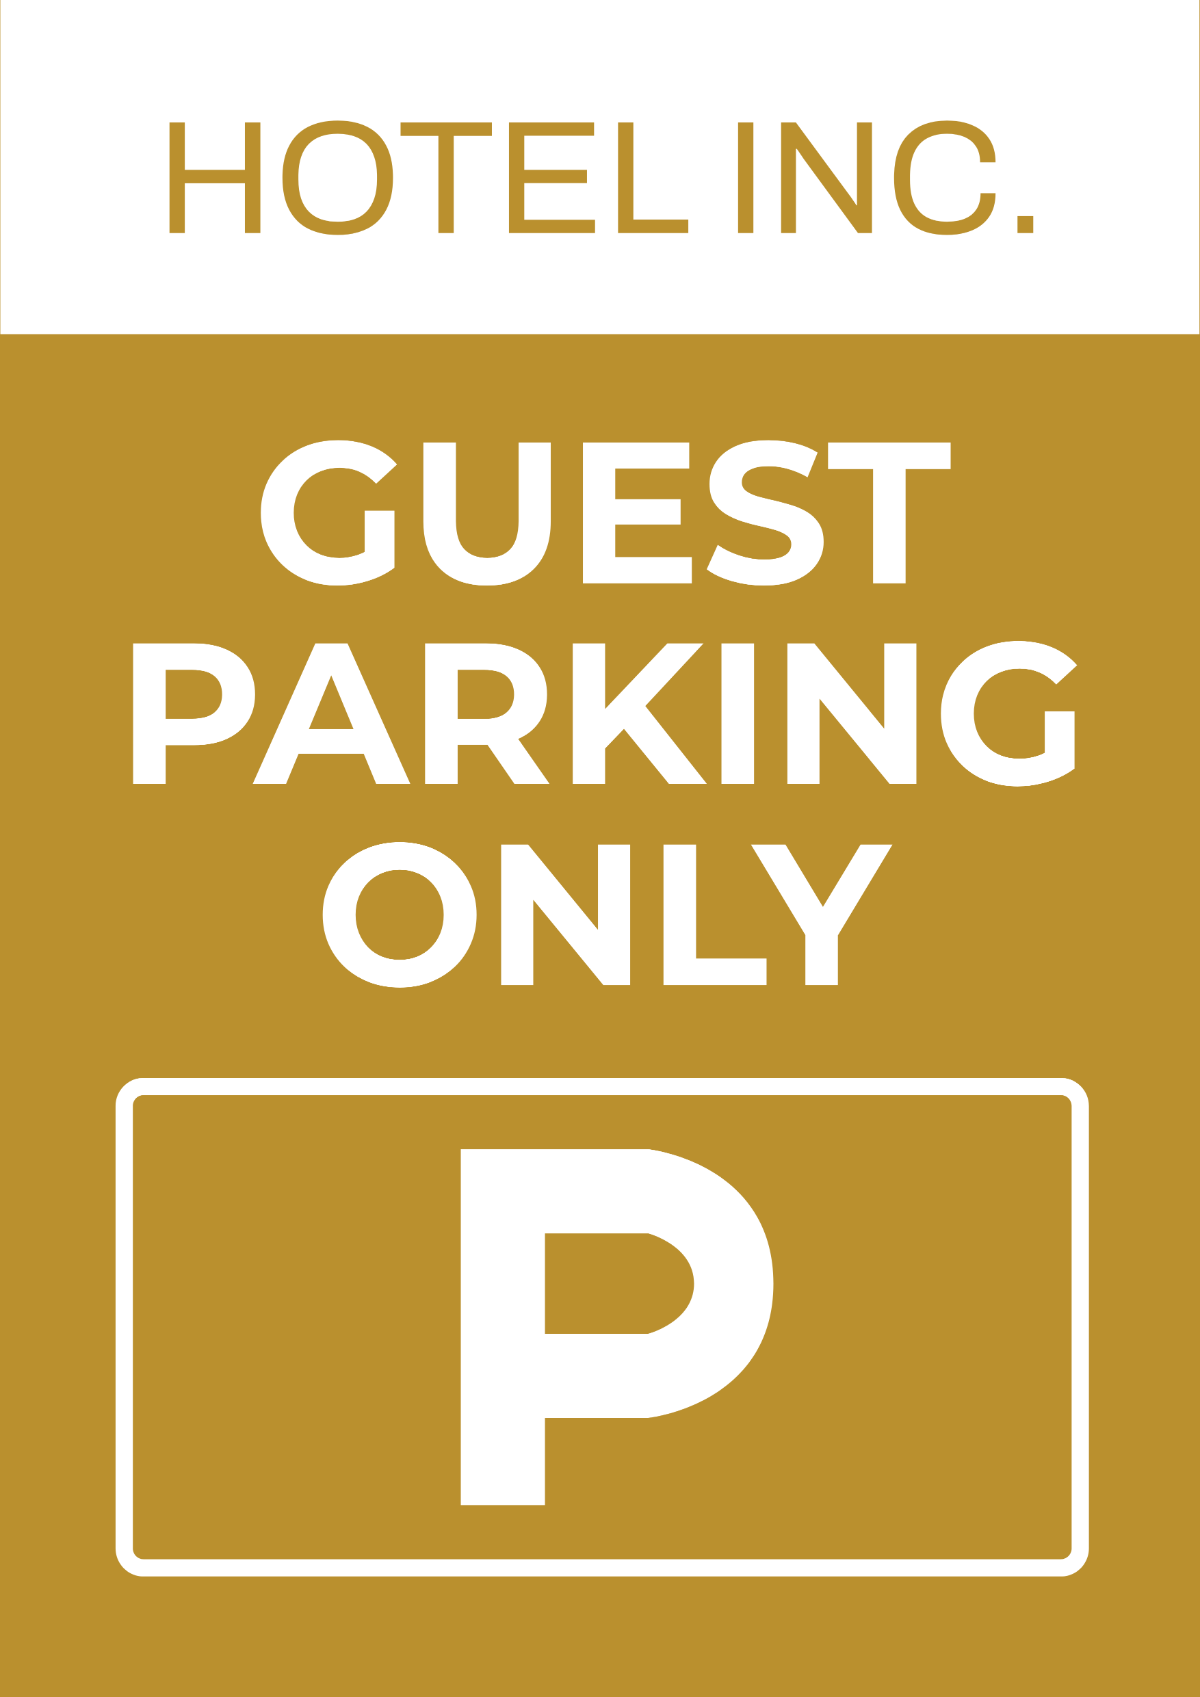 Hotel Parking Signage